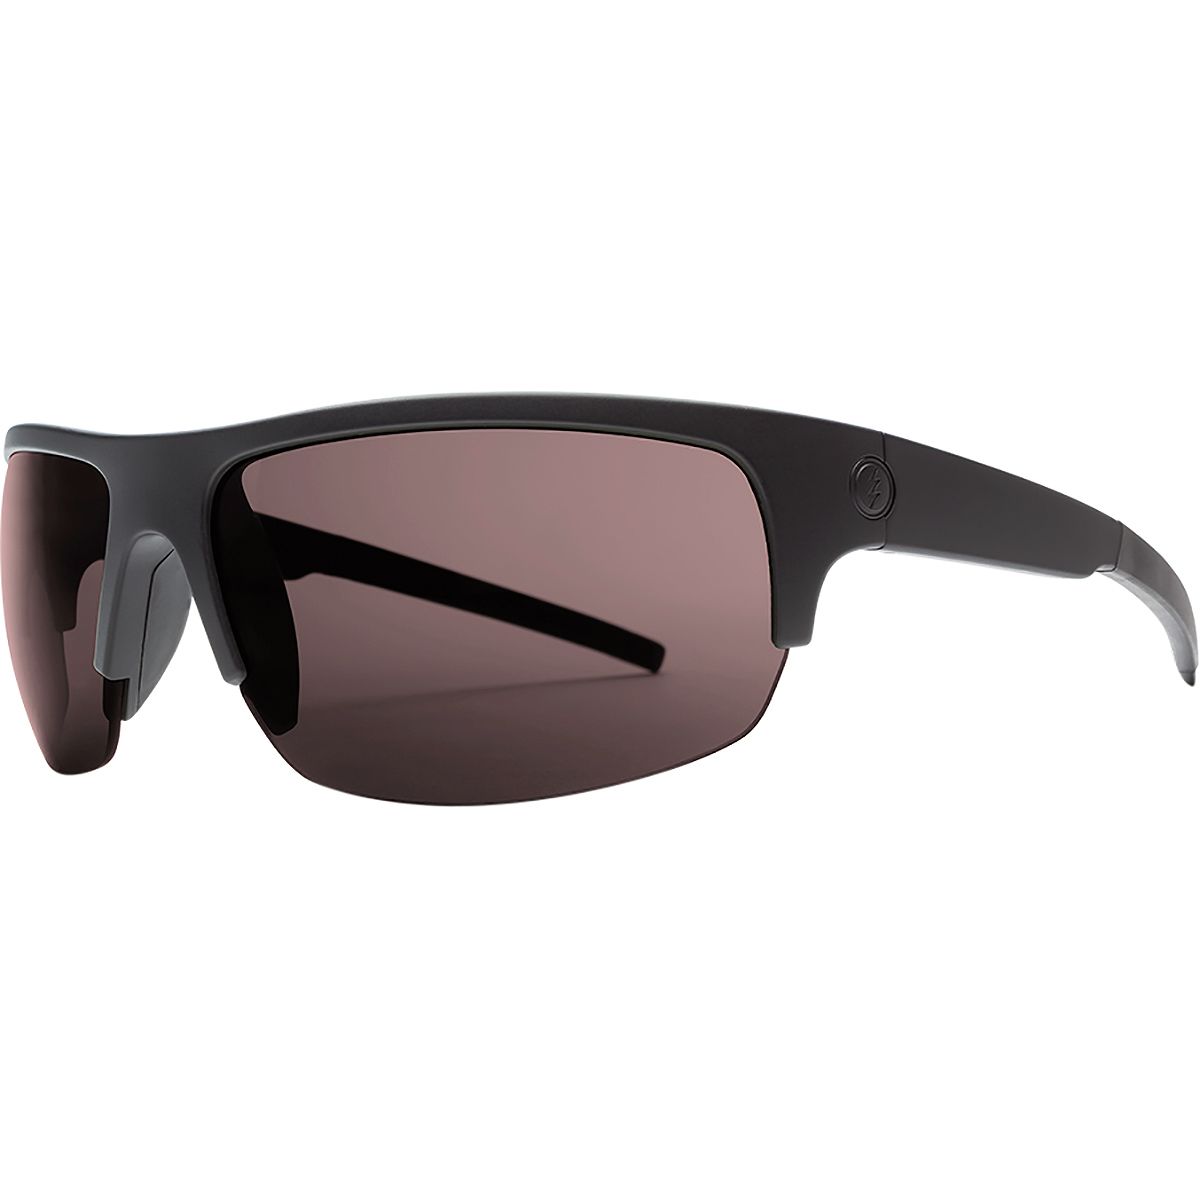 Electric Tech One Pro Polarized Sunglasses - Men's